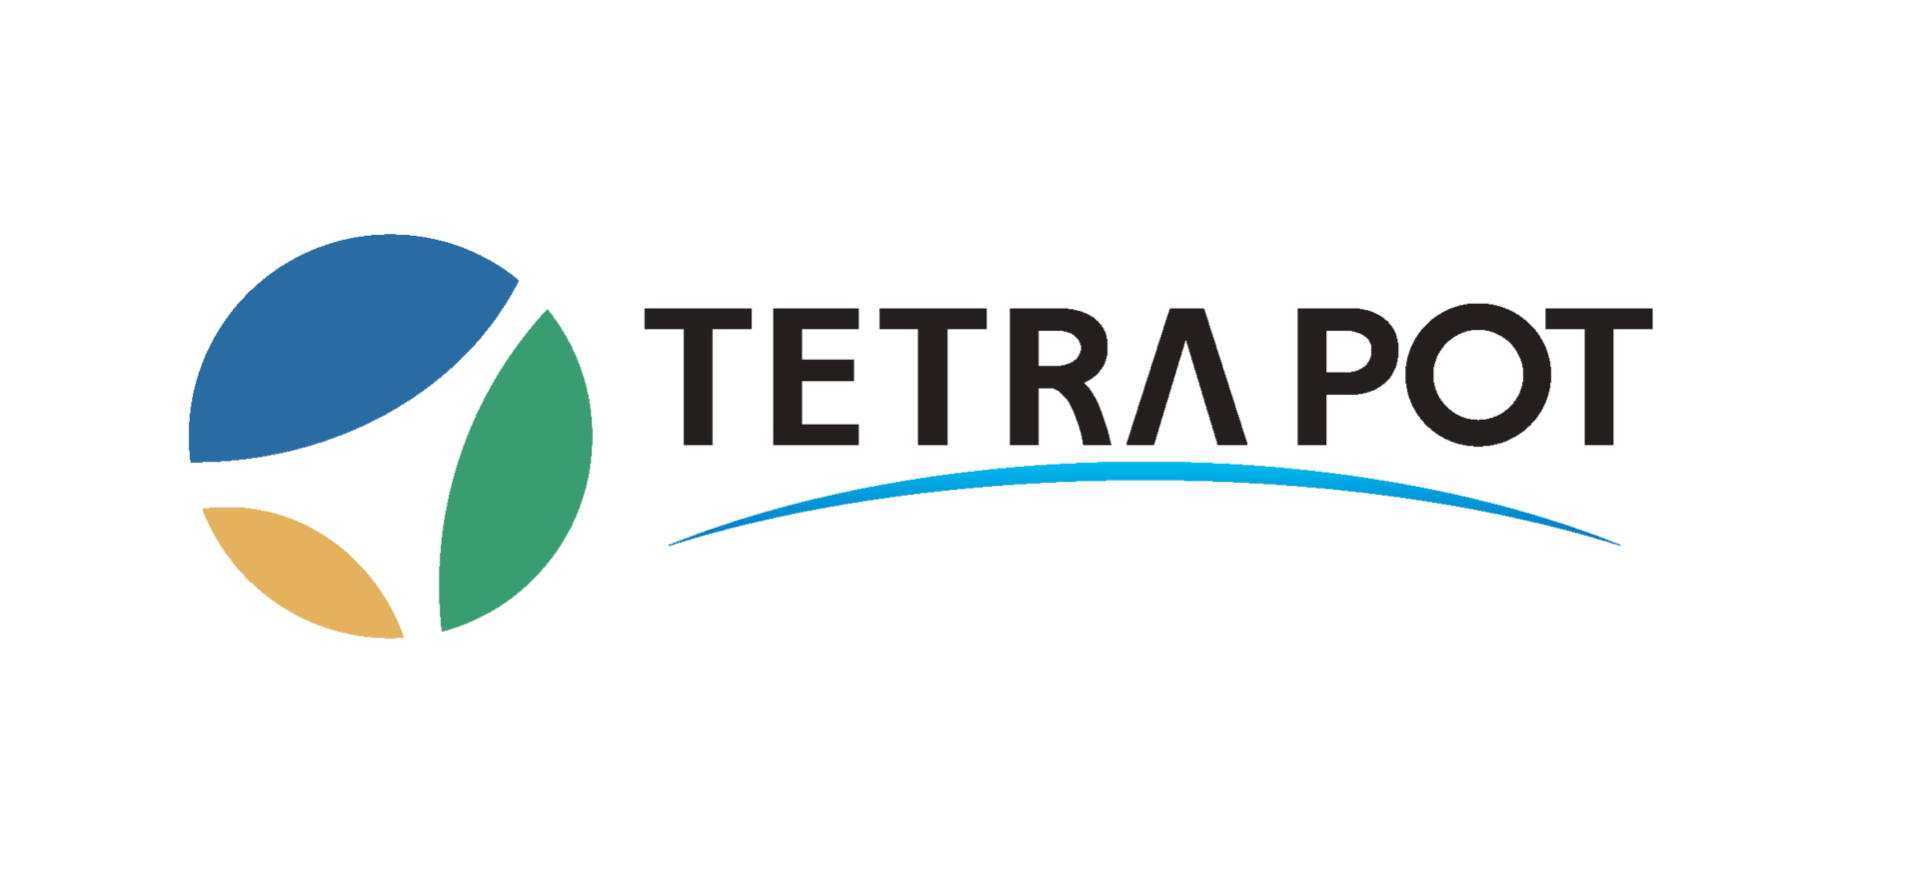 TETRAPOT株式会社